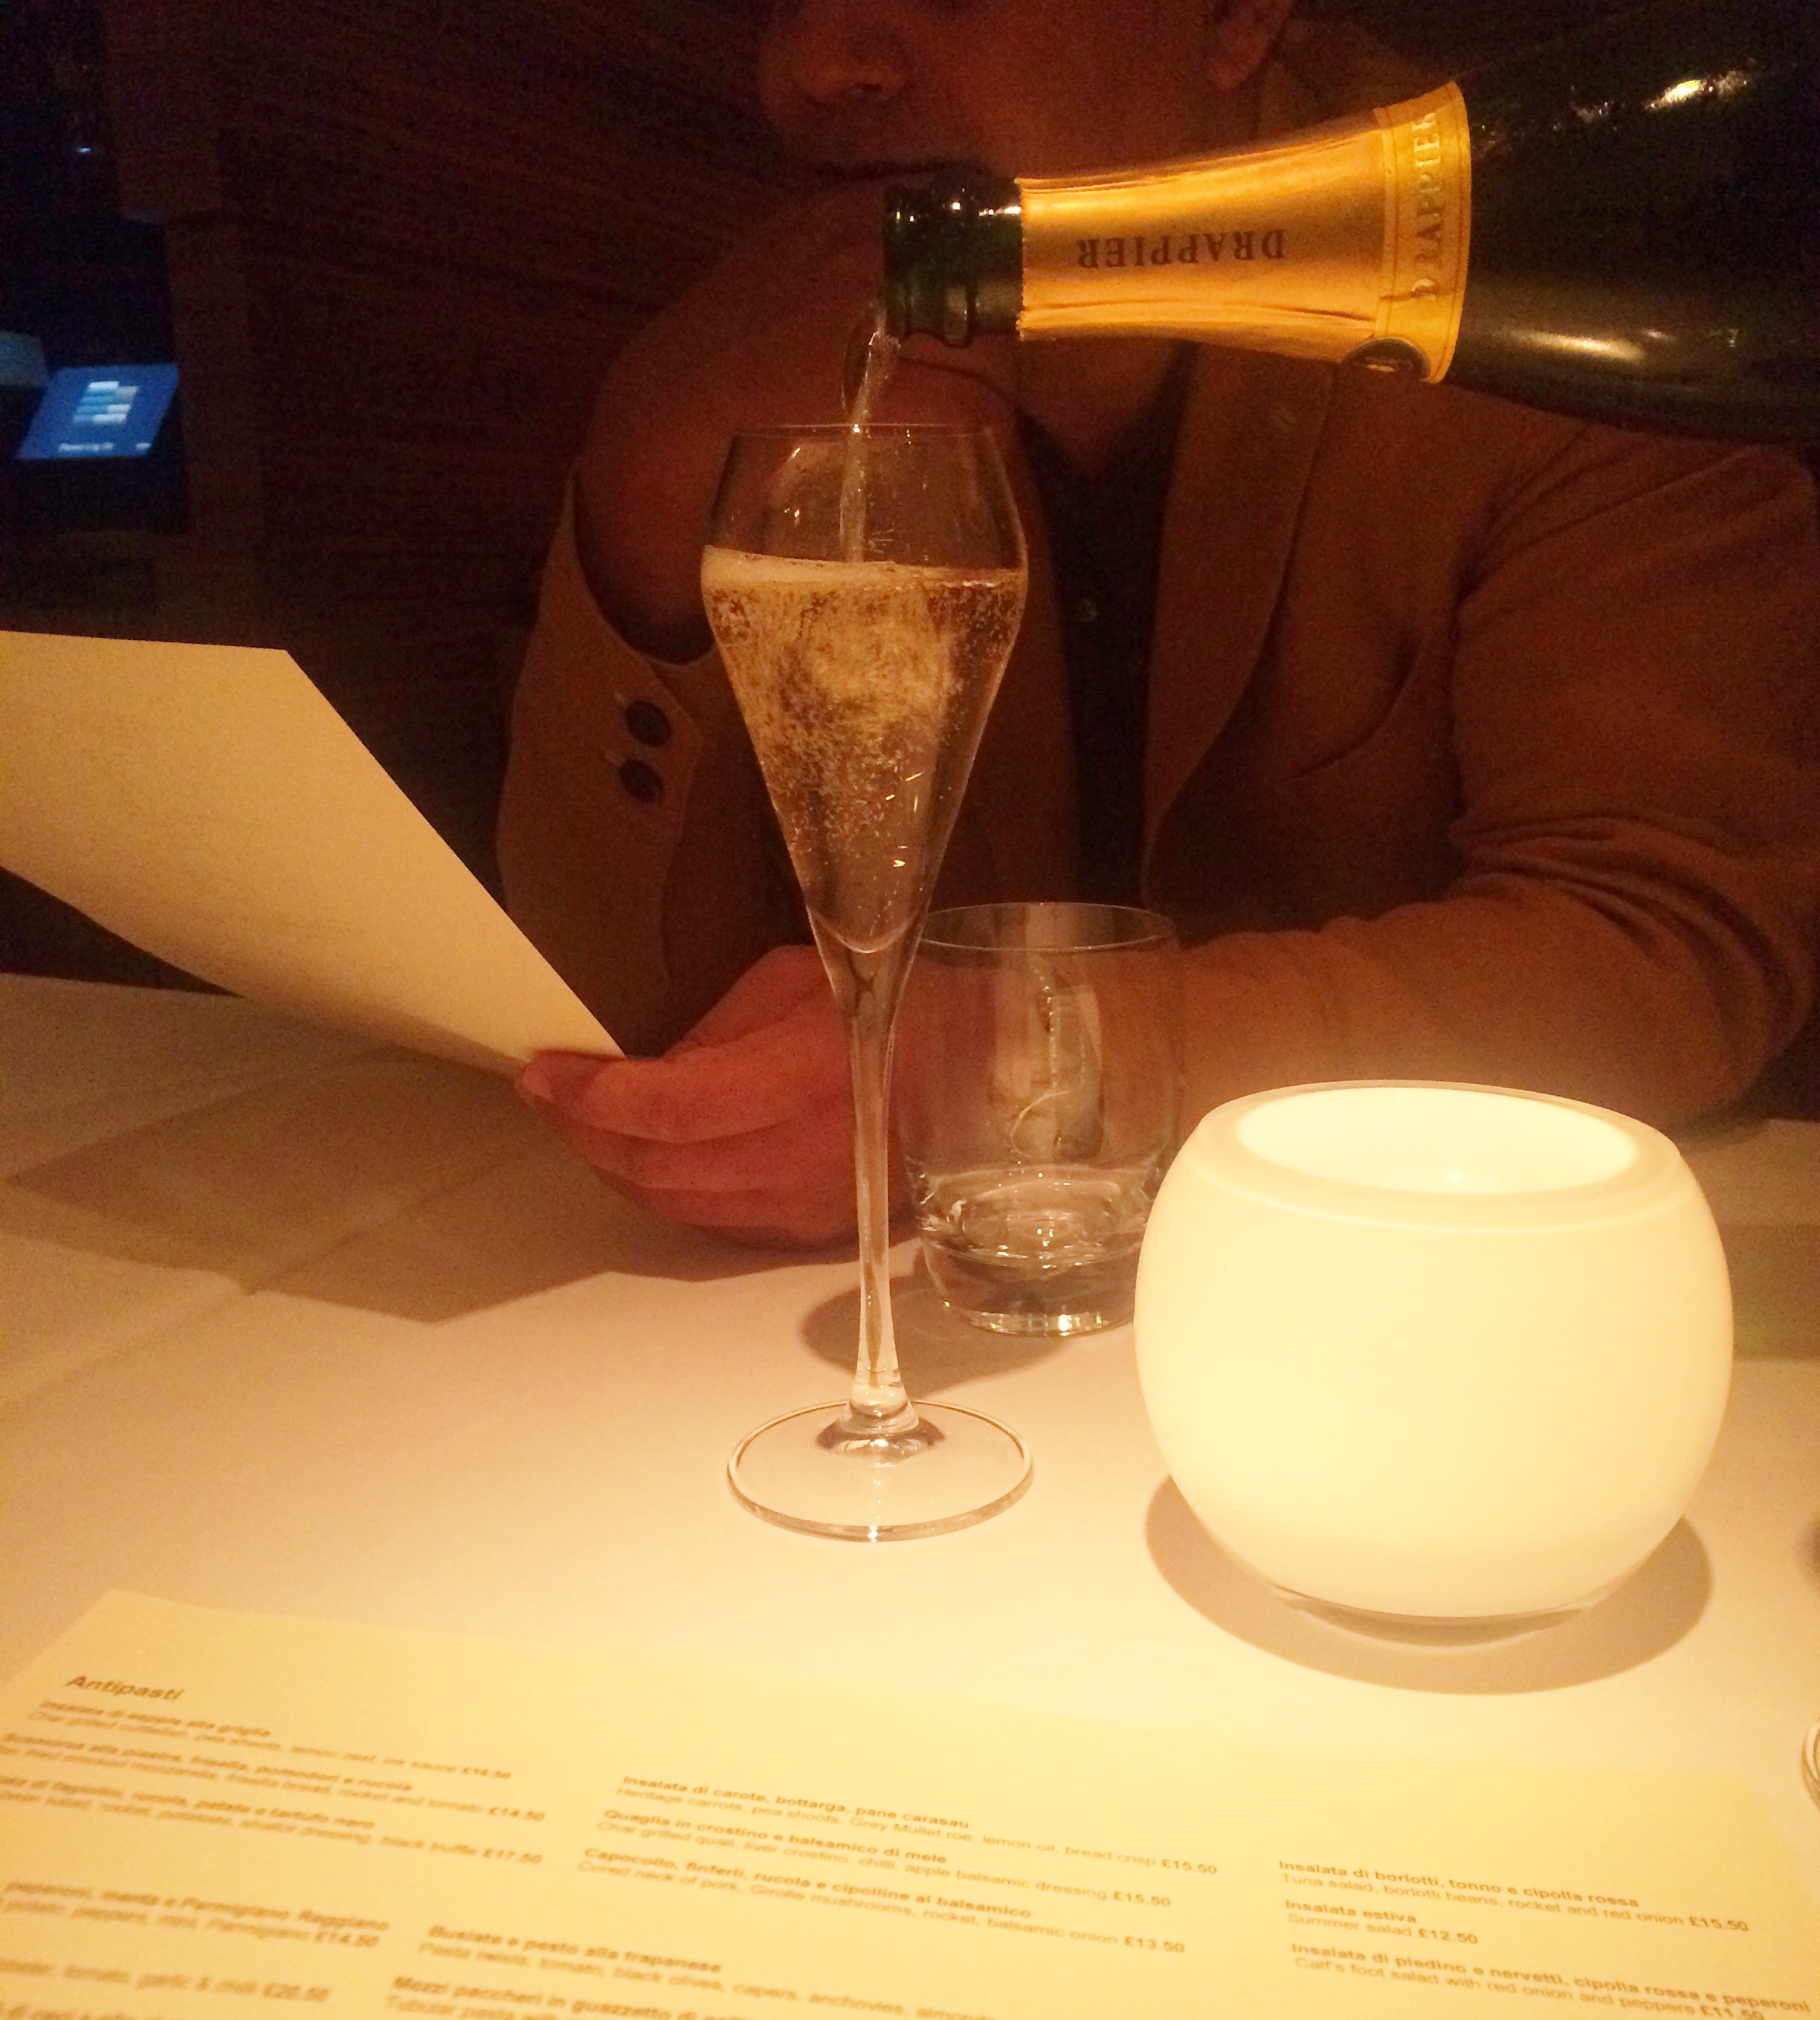 champagne